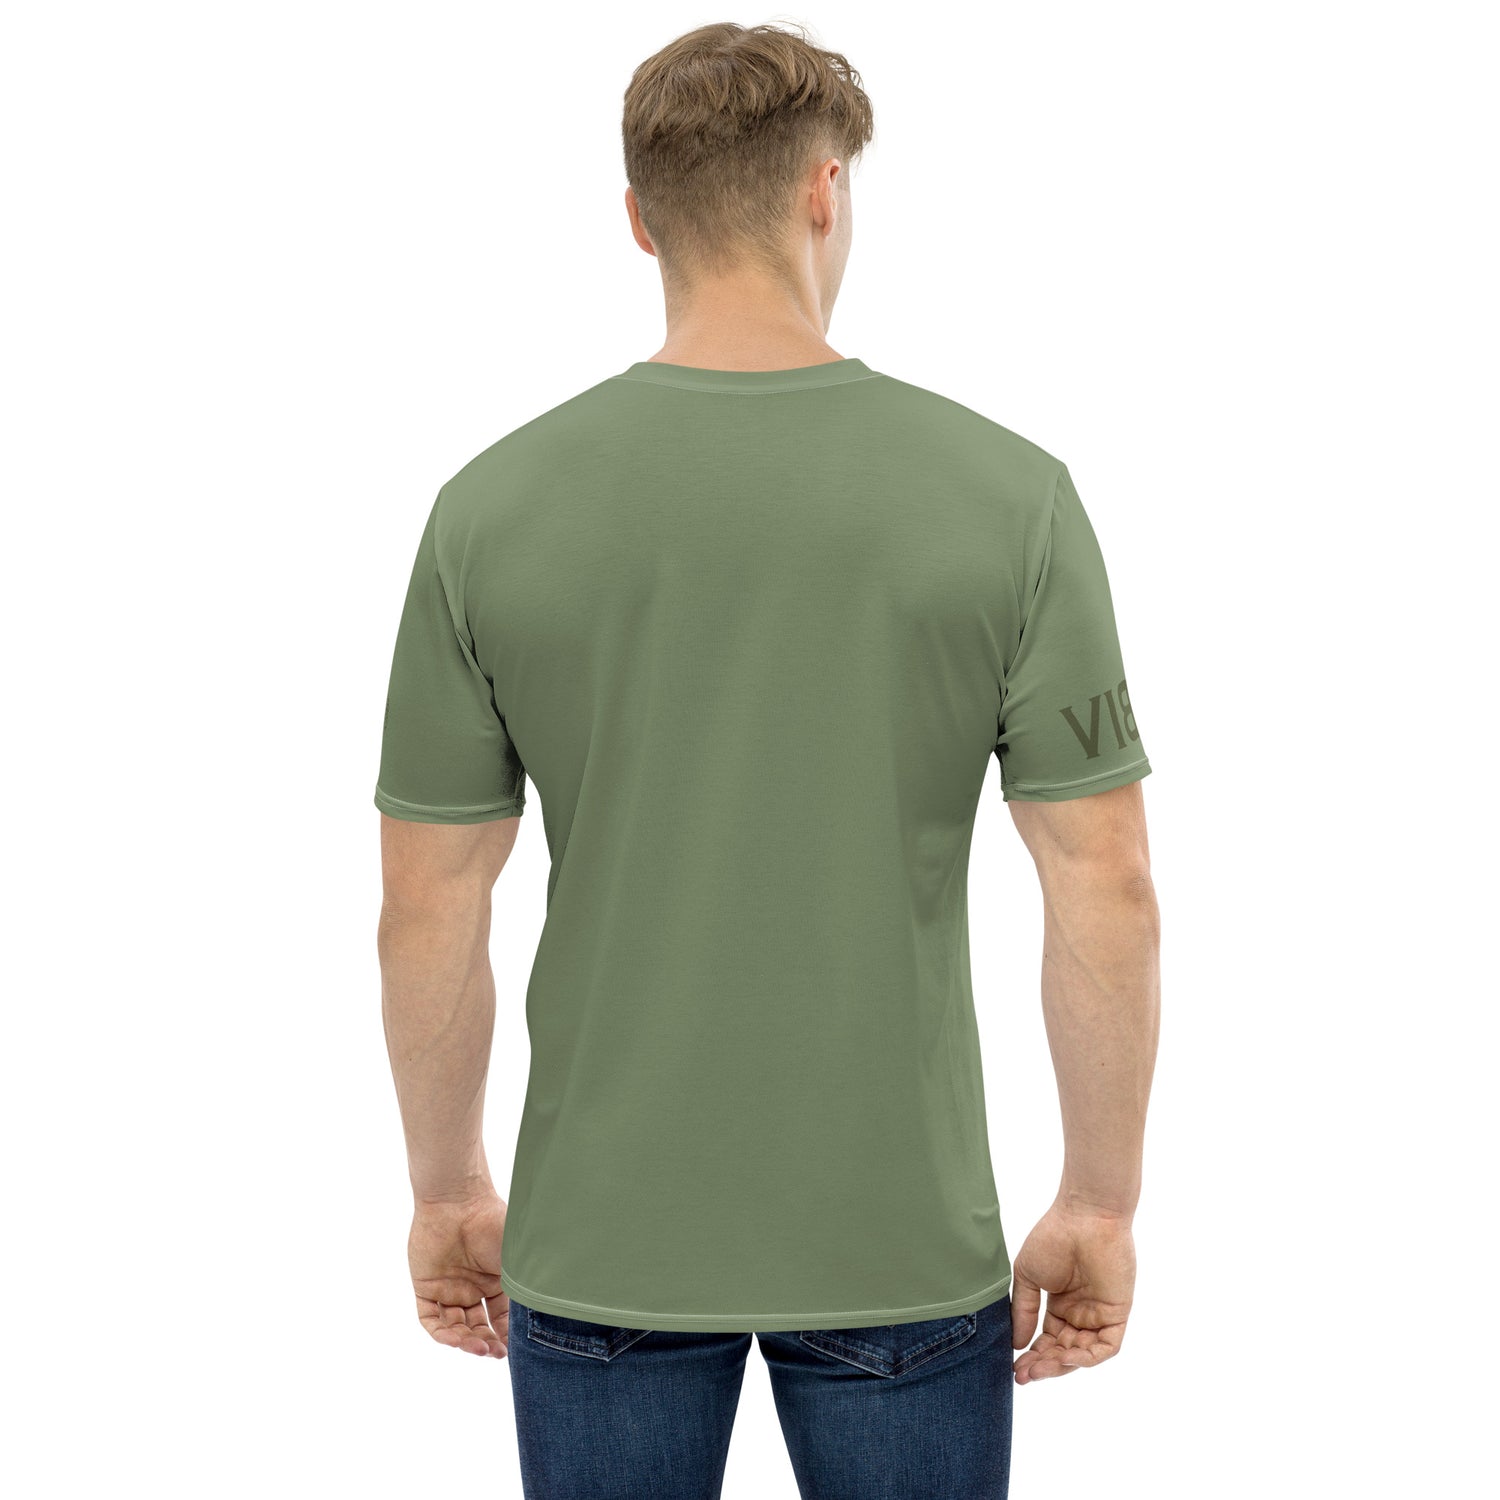 TOV Herren Premium T-Shirt VIBESONE (Grün/Grün)